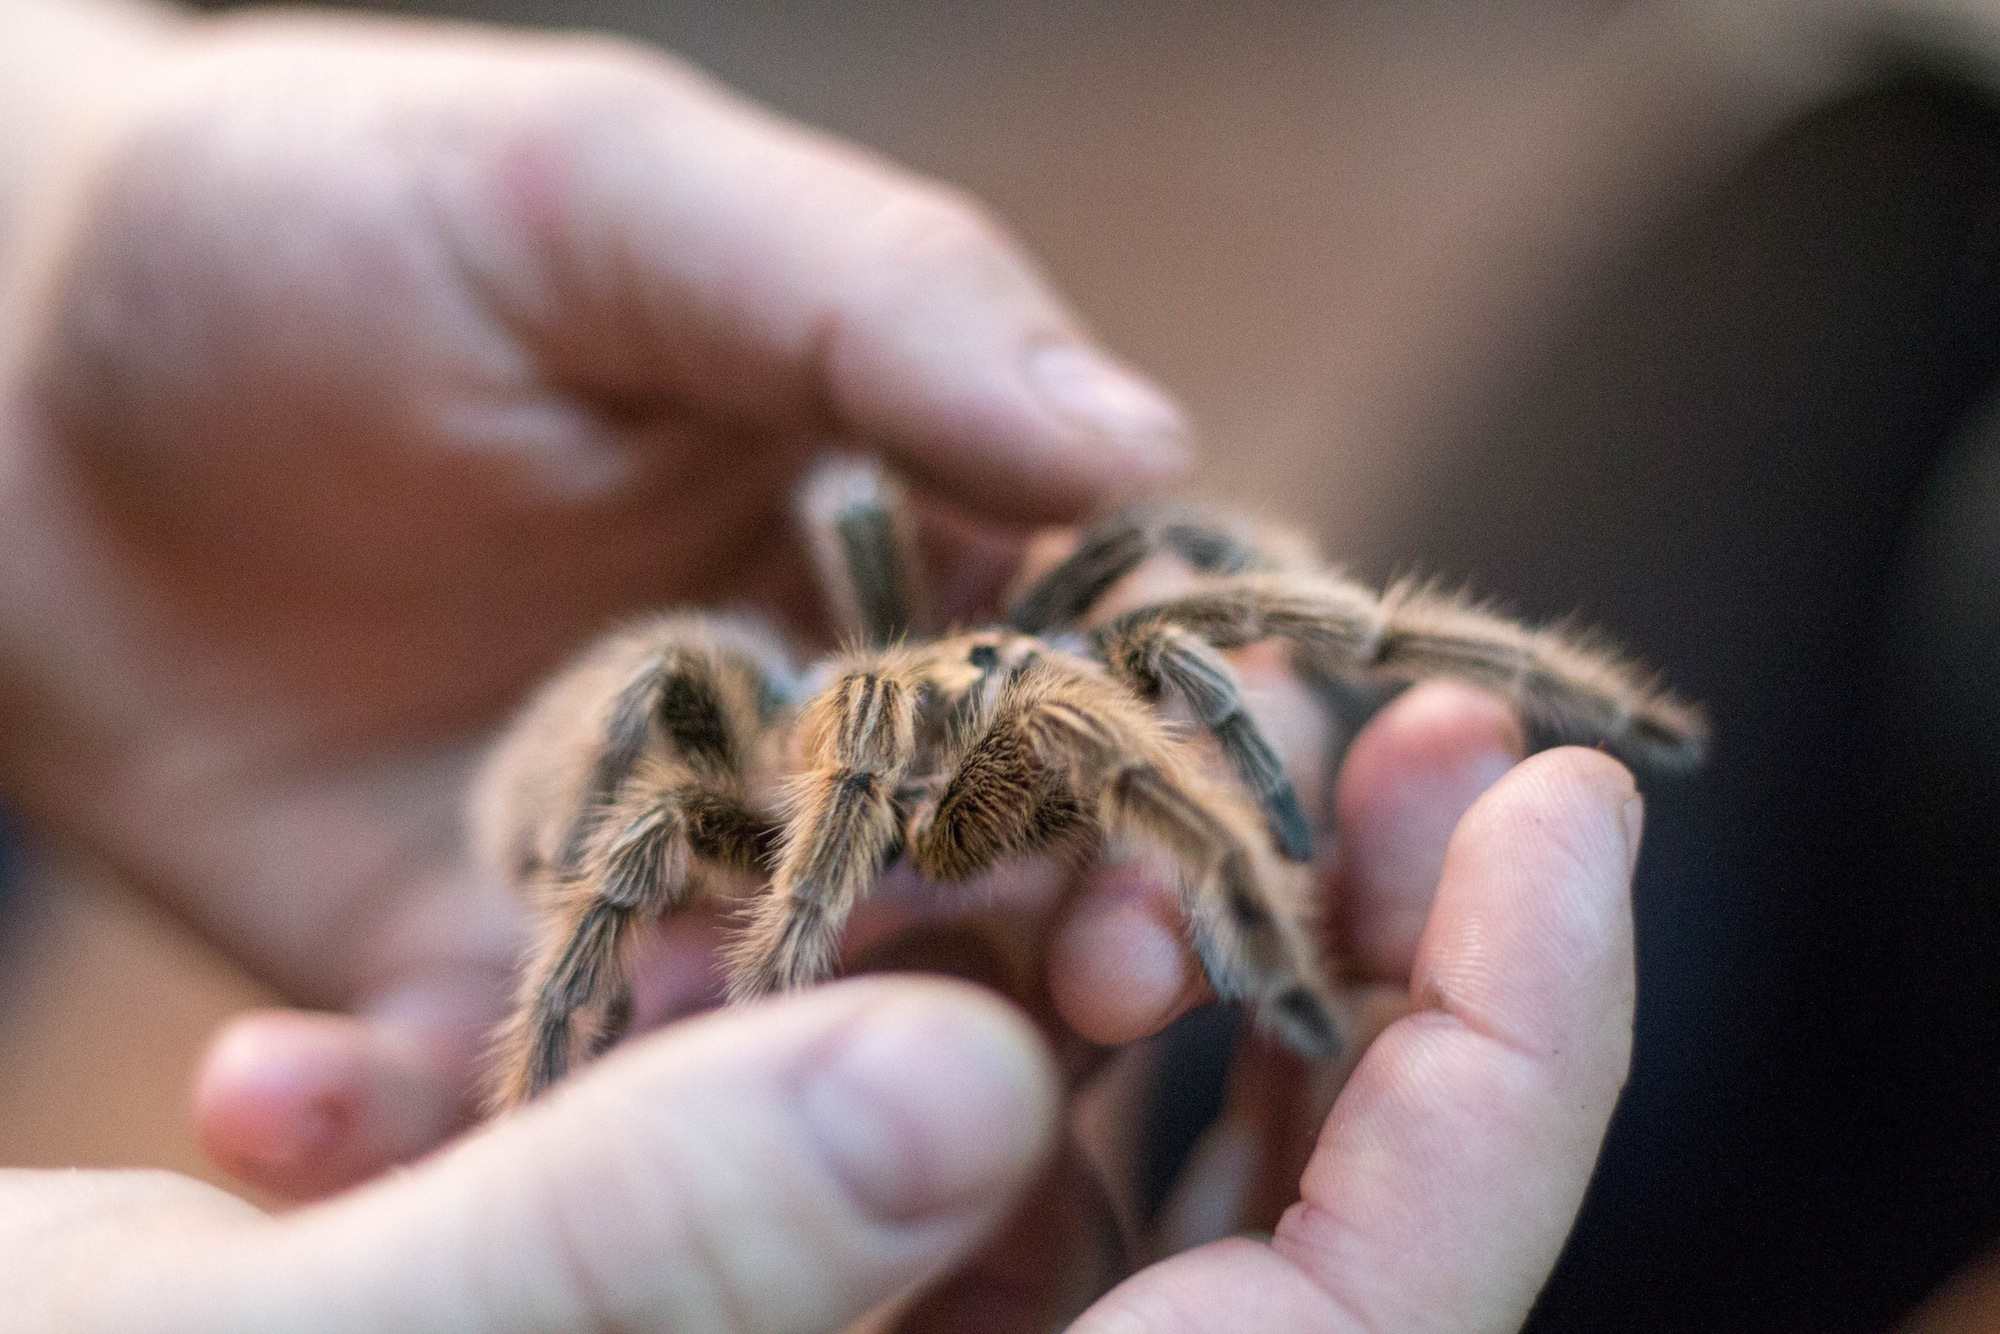 Tarantula in person's hands